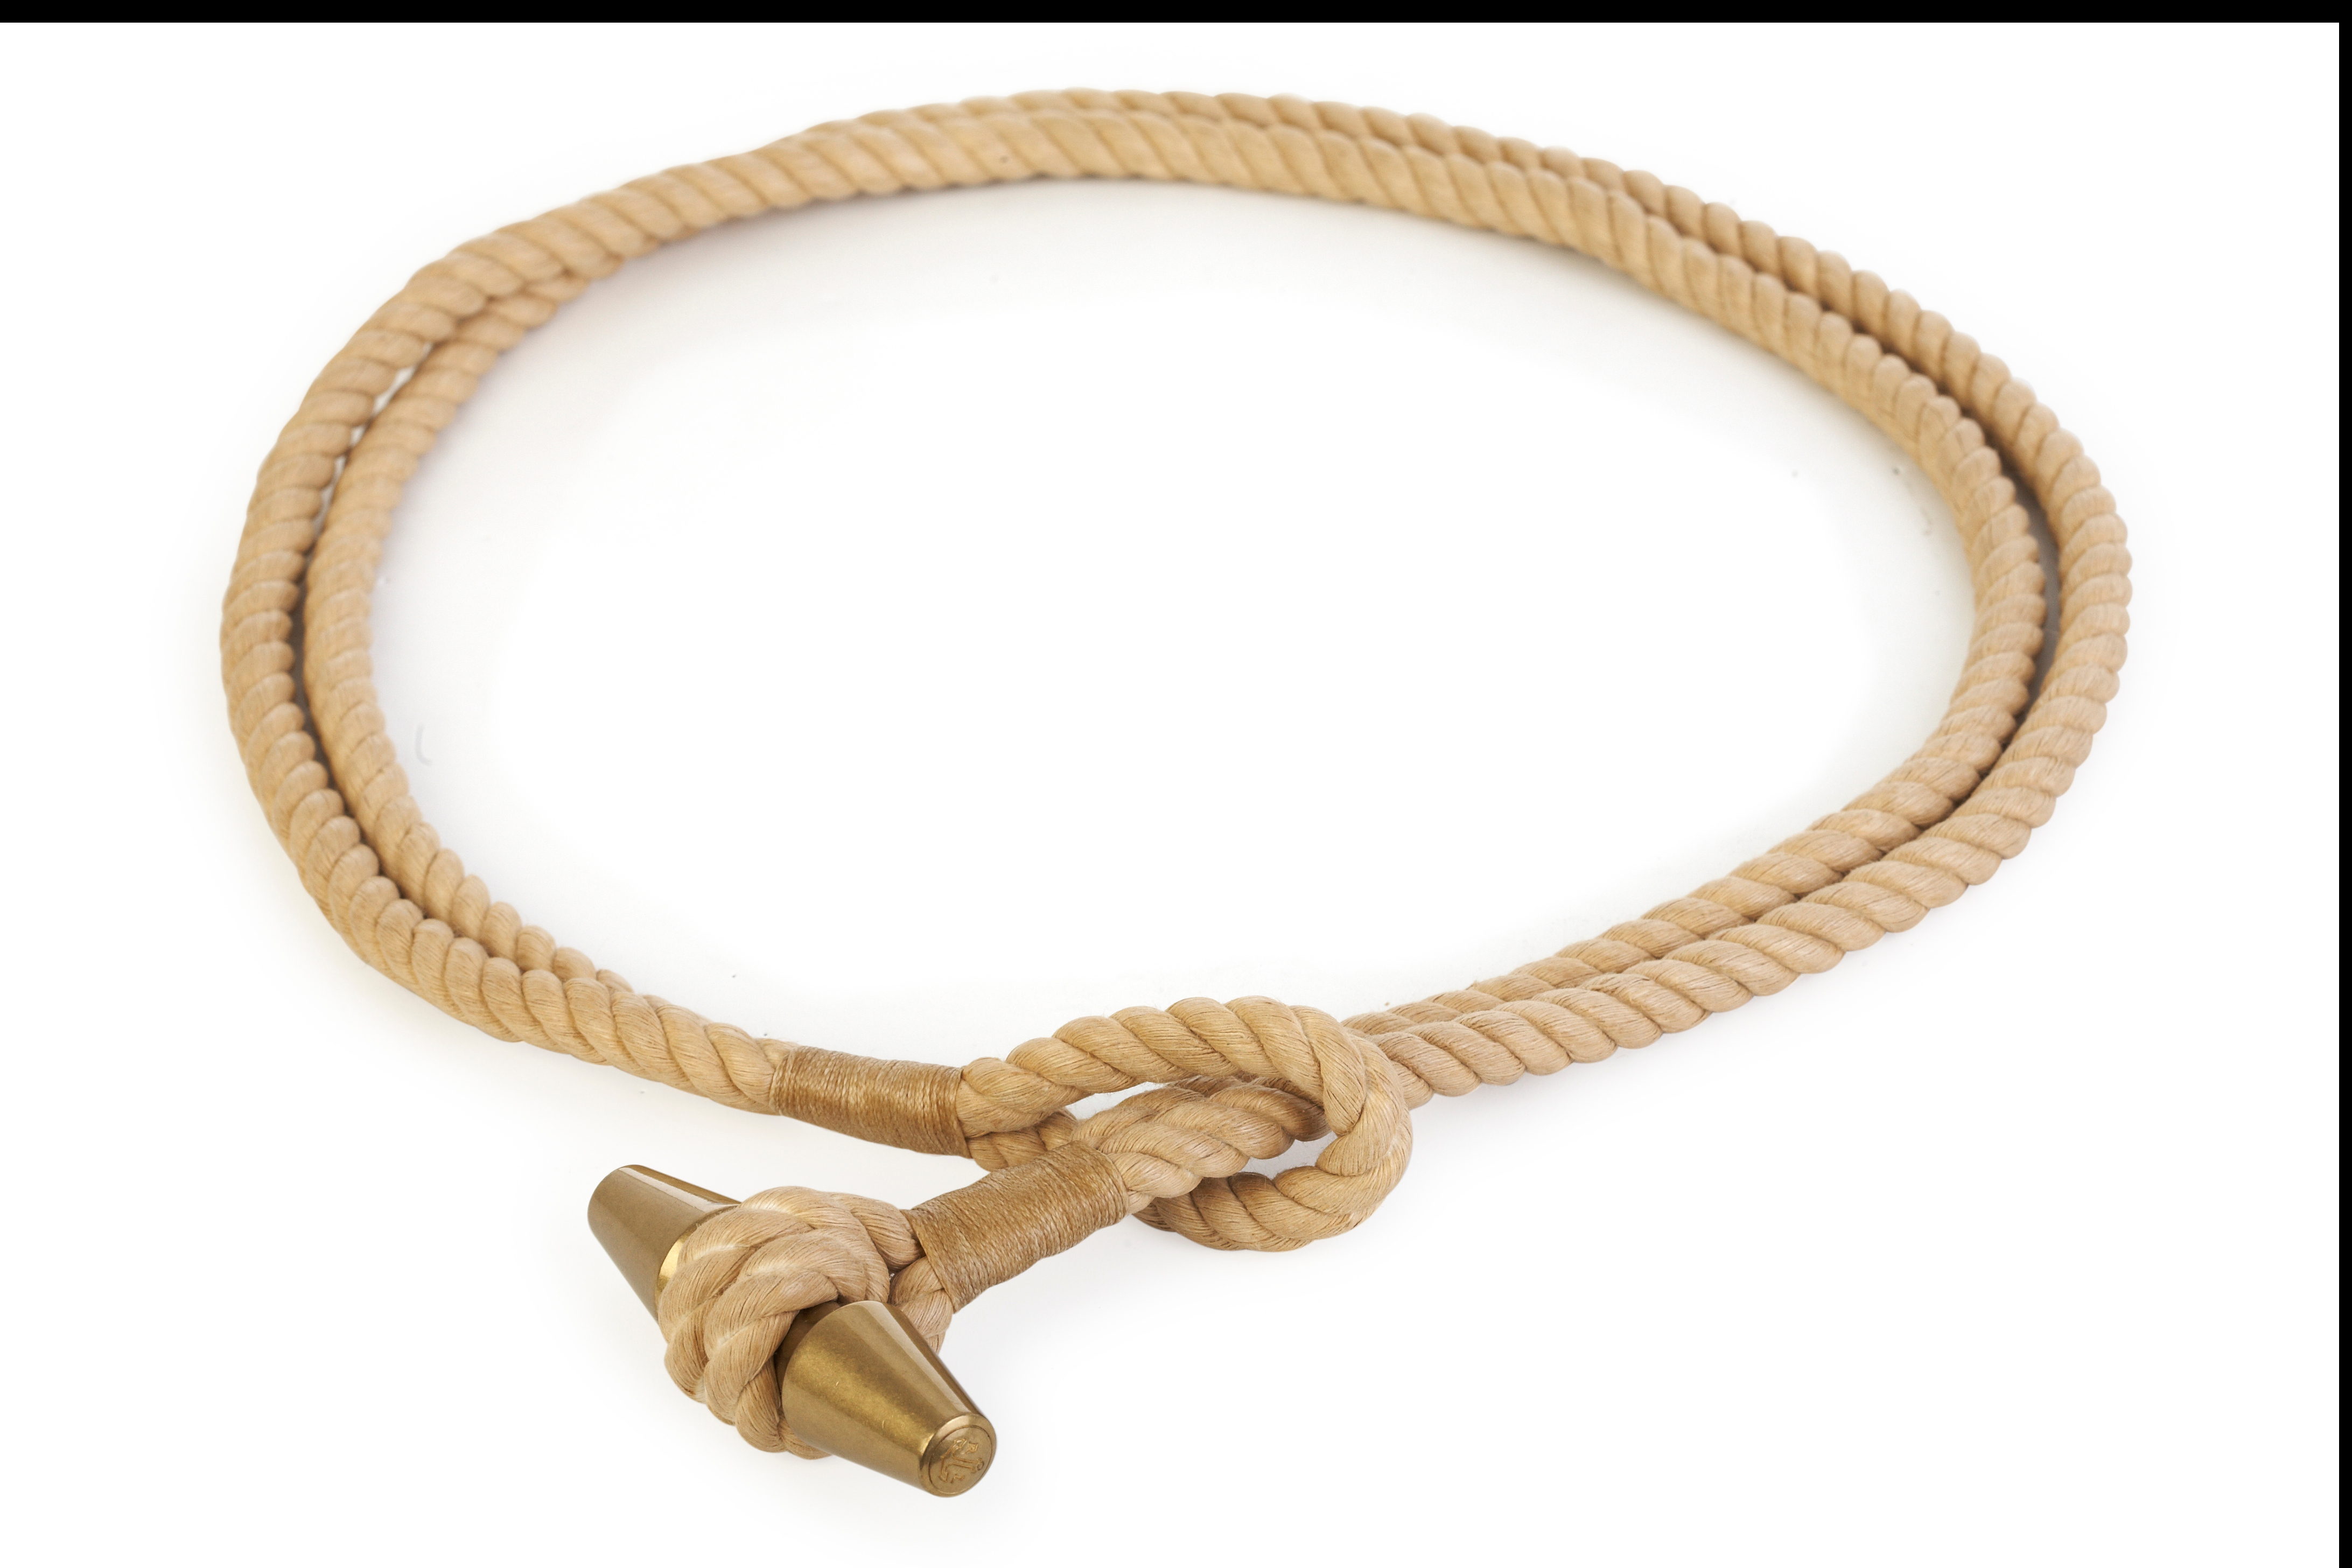 ralph lauren rope belt - caicosoil.com.